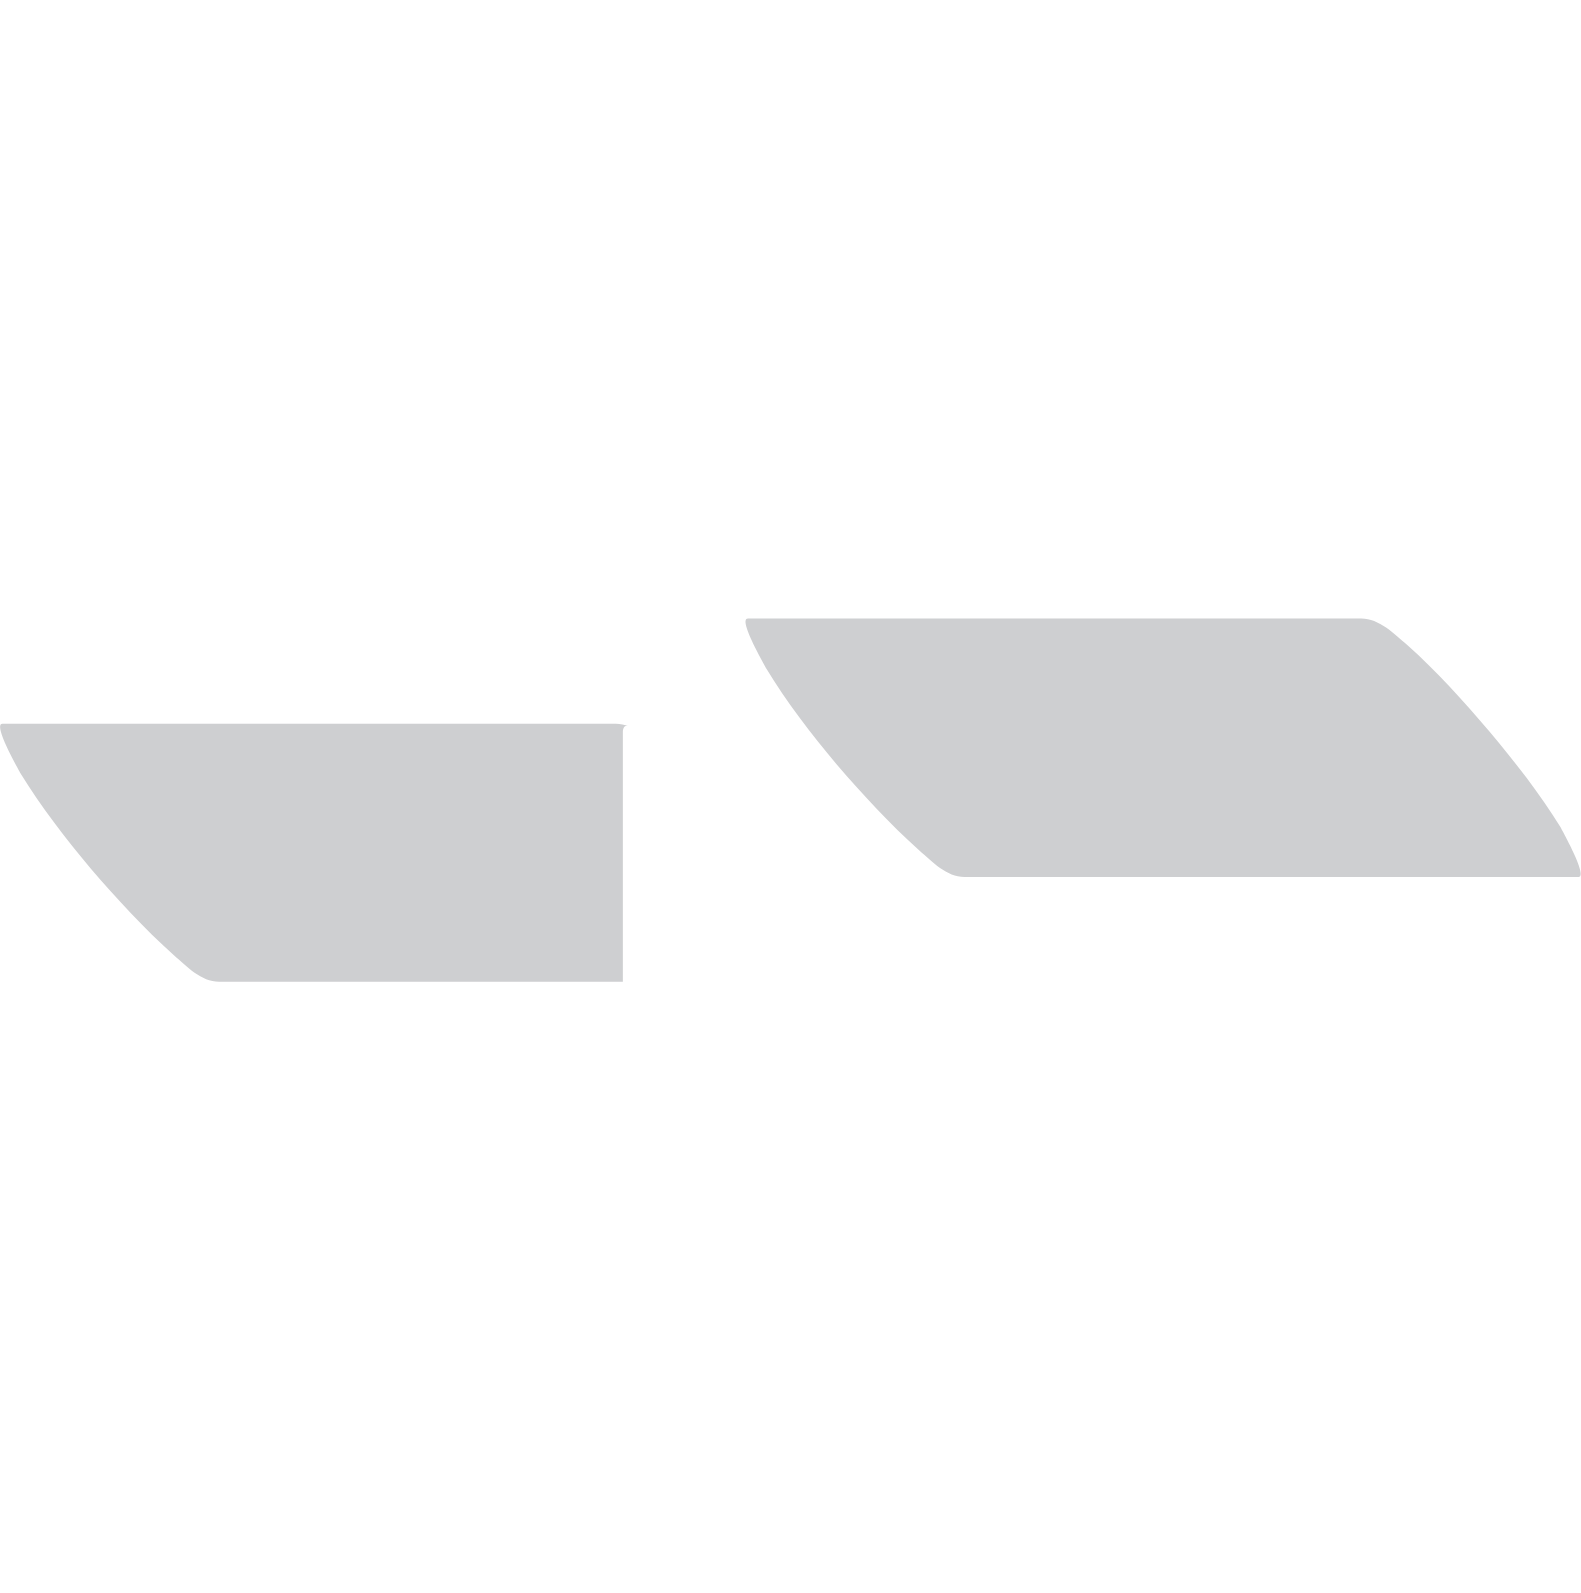 SWK Holdings logo for dark backgrounds (transparent PNG)